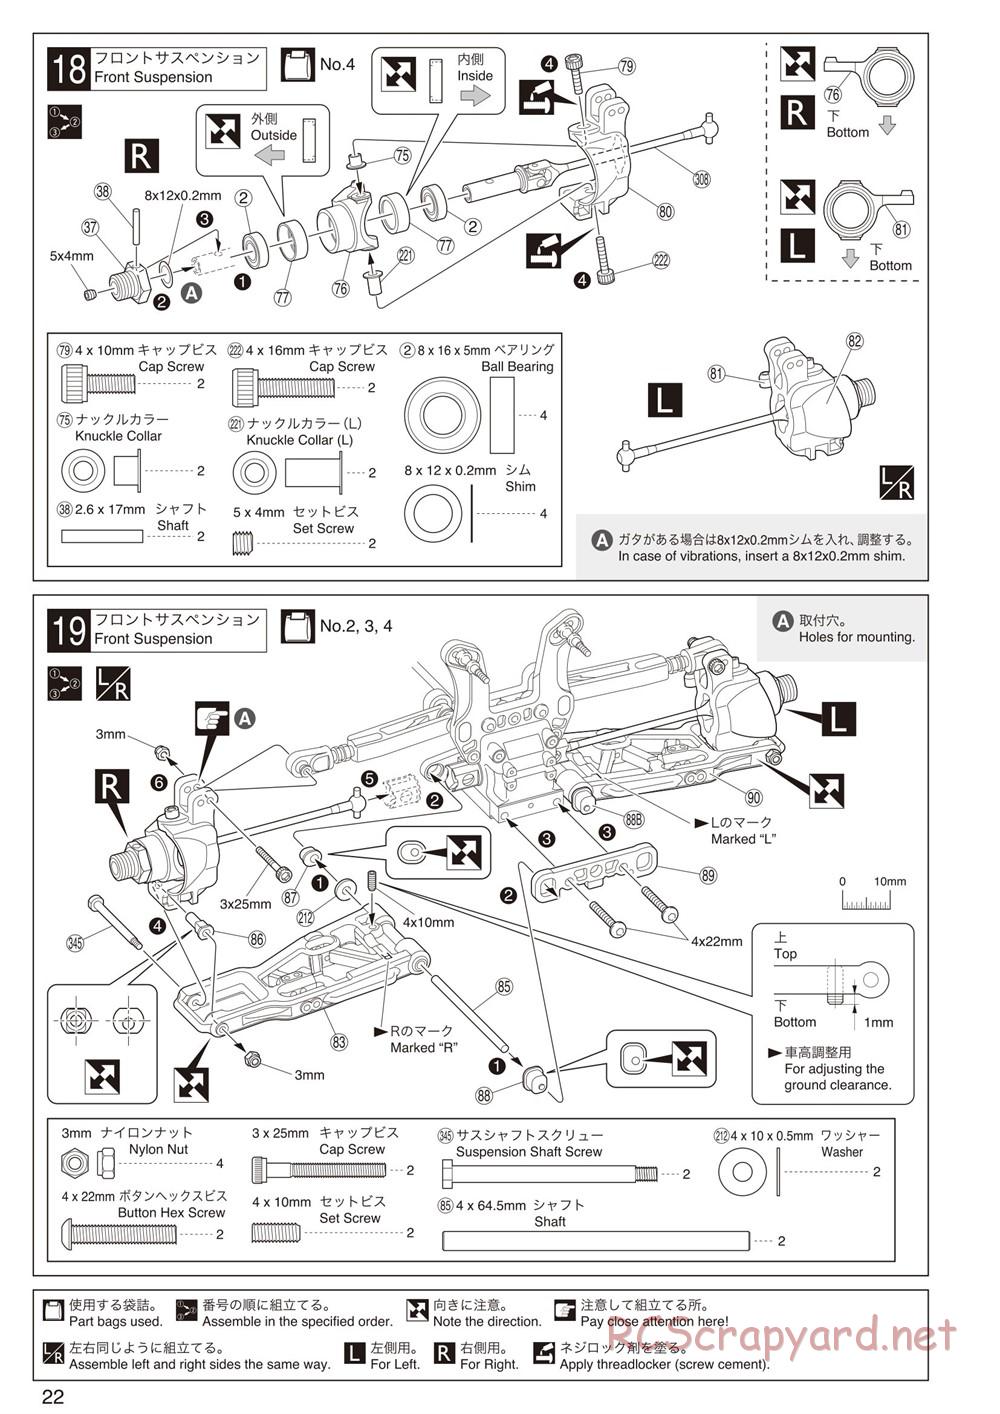 Kyosho - Inferno MP9 TKI4 - Manual - Page 22